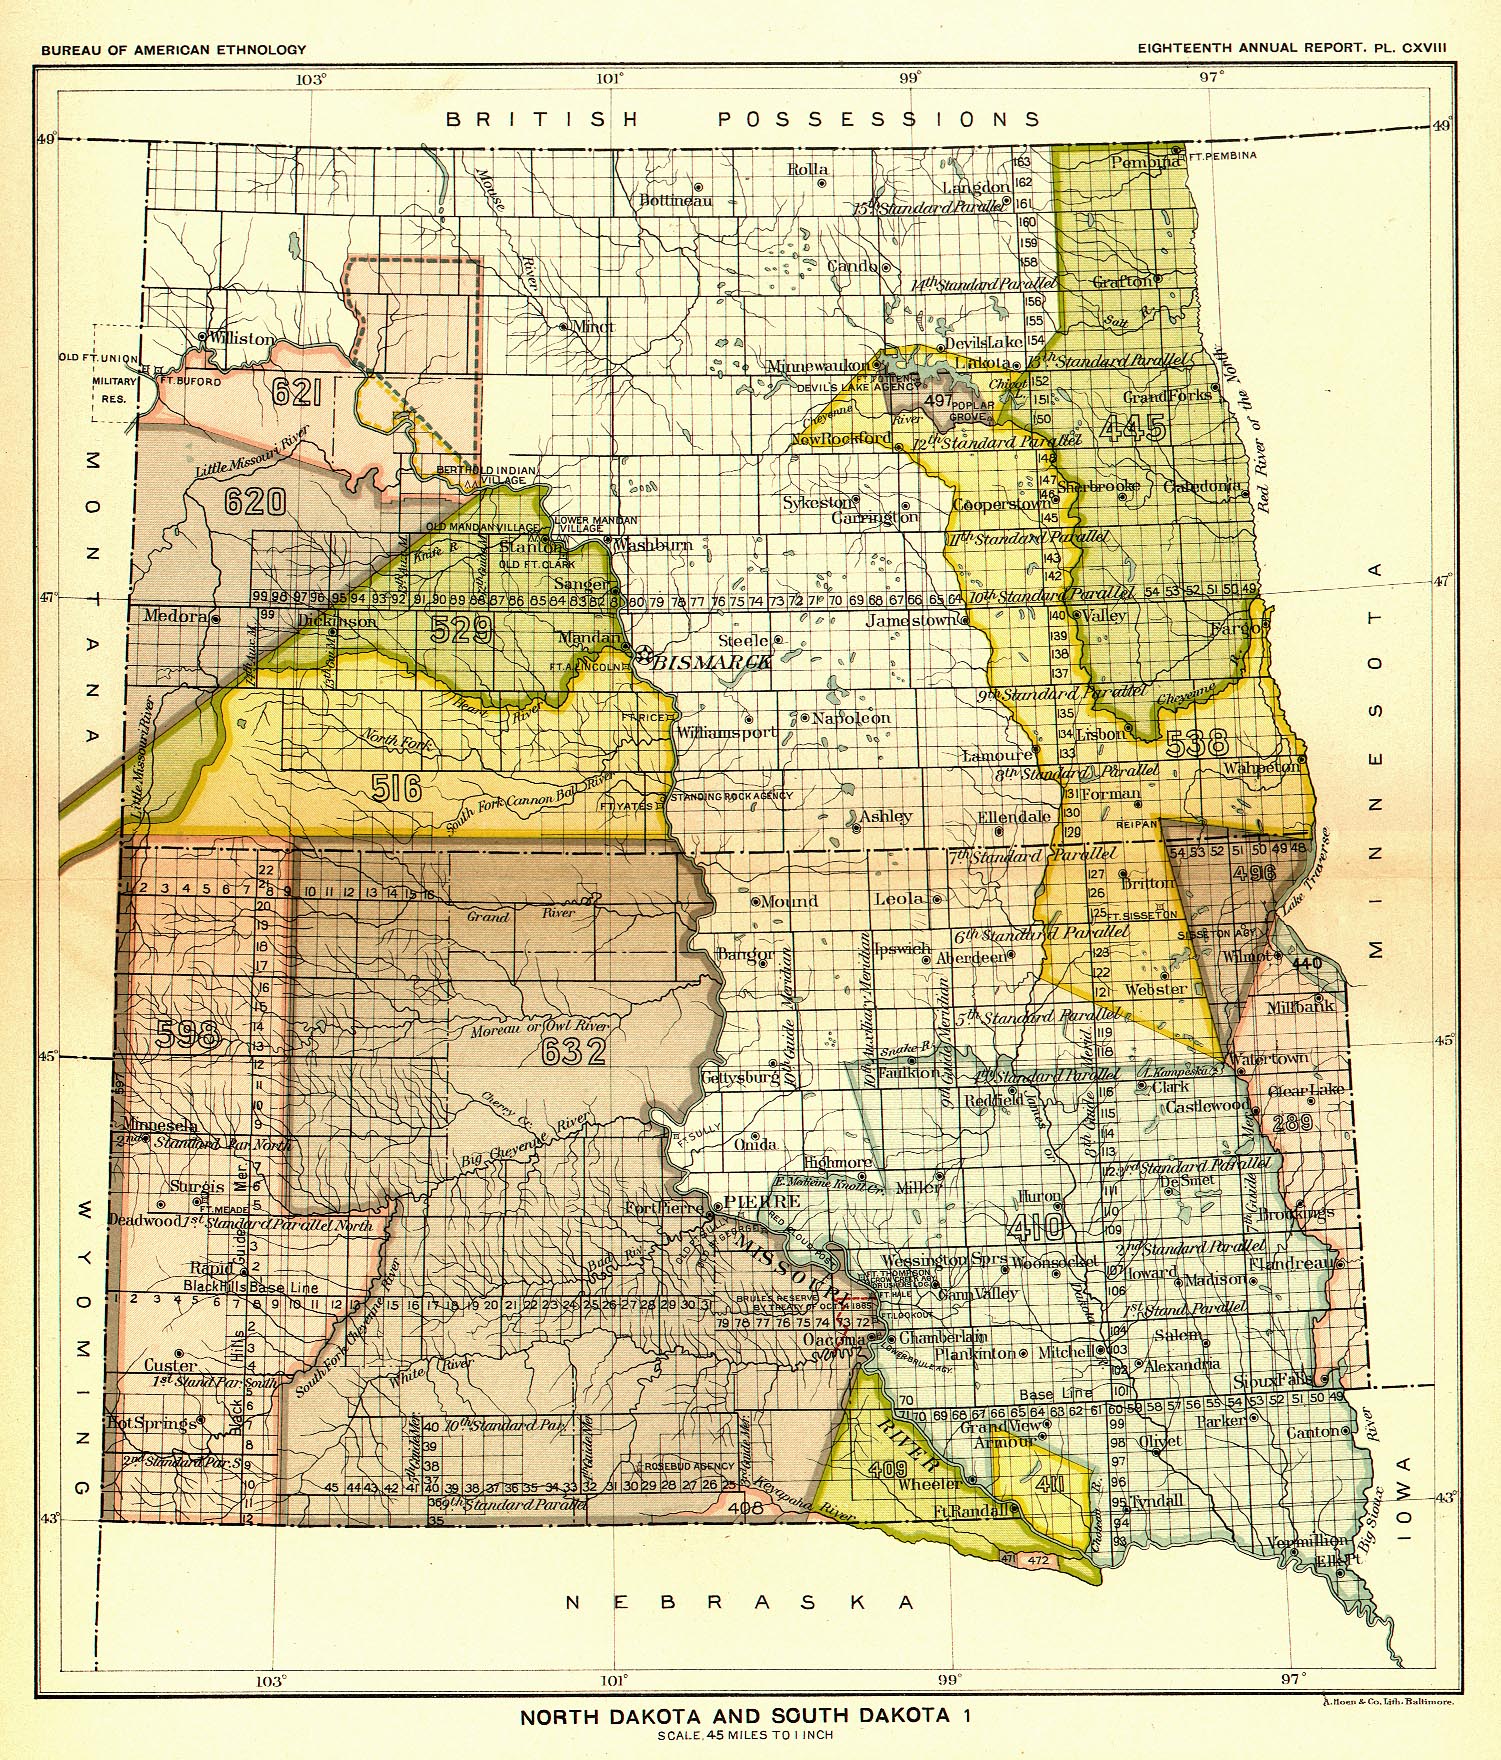 North Dakota and South Dakota 1, 
Map 11